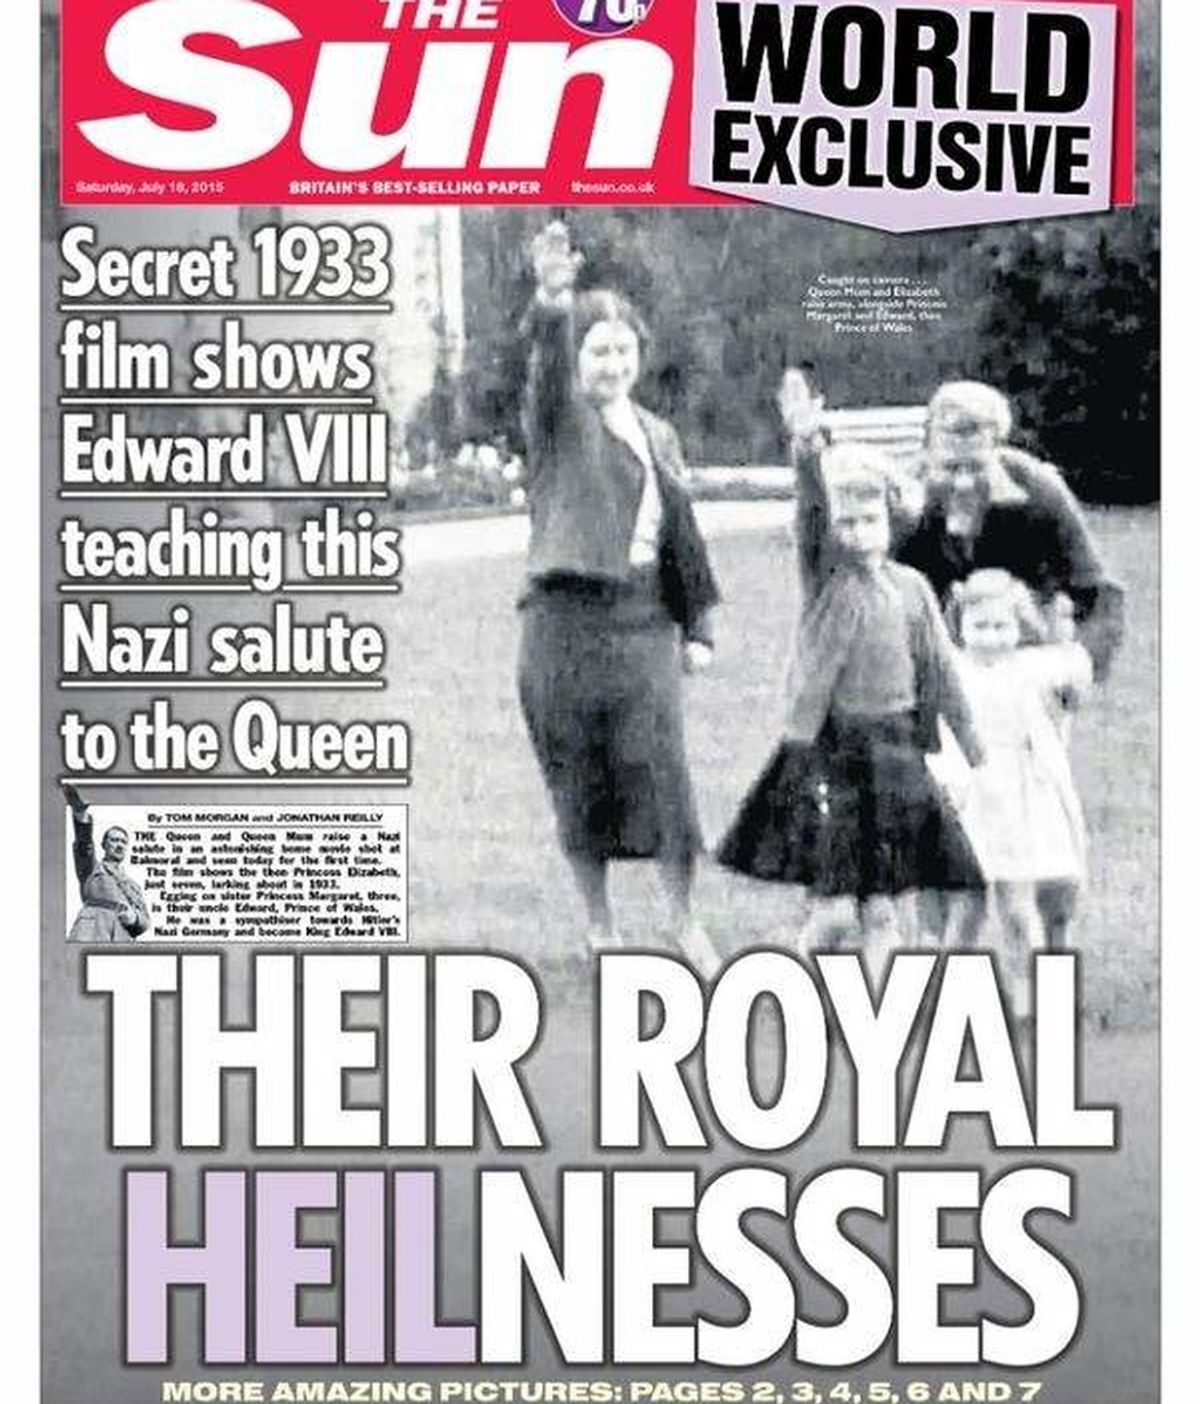 Portada de 'THE SUN' donde la reina Isabel II hace el saludo nazi